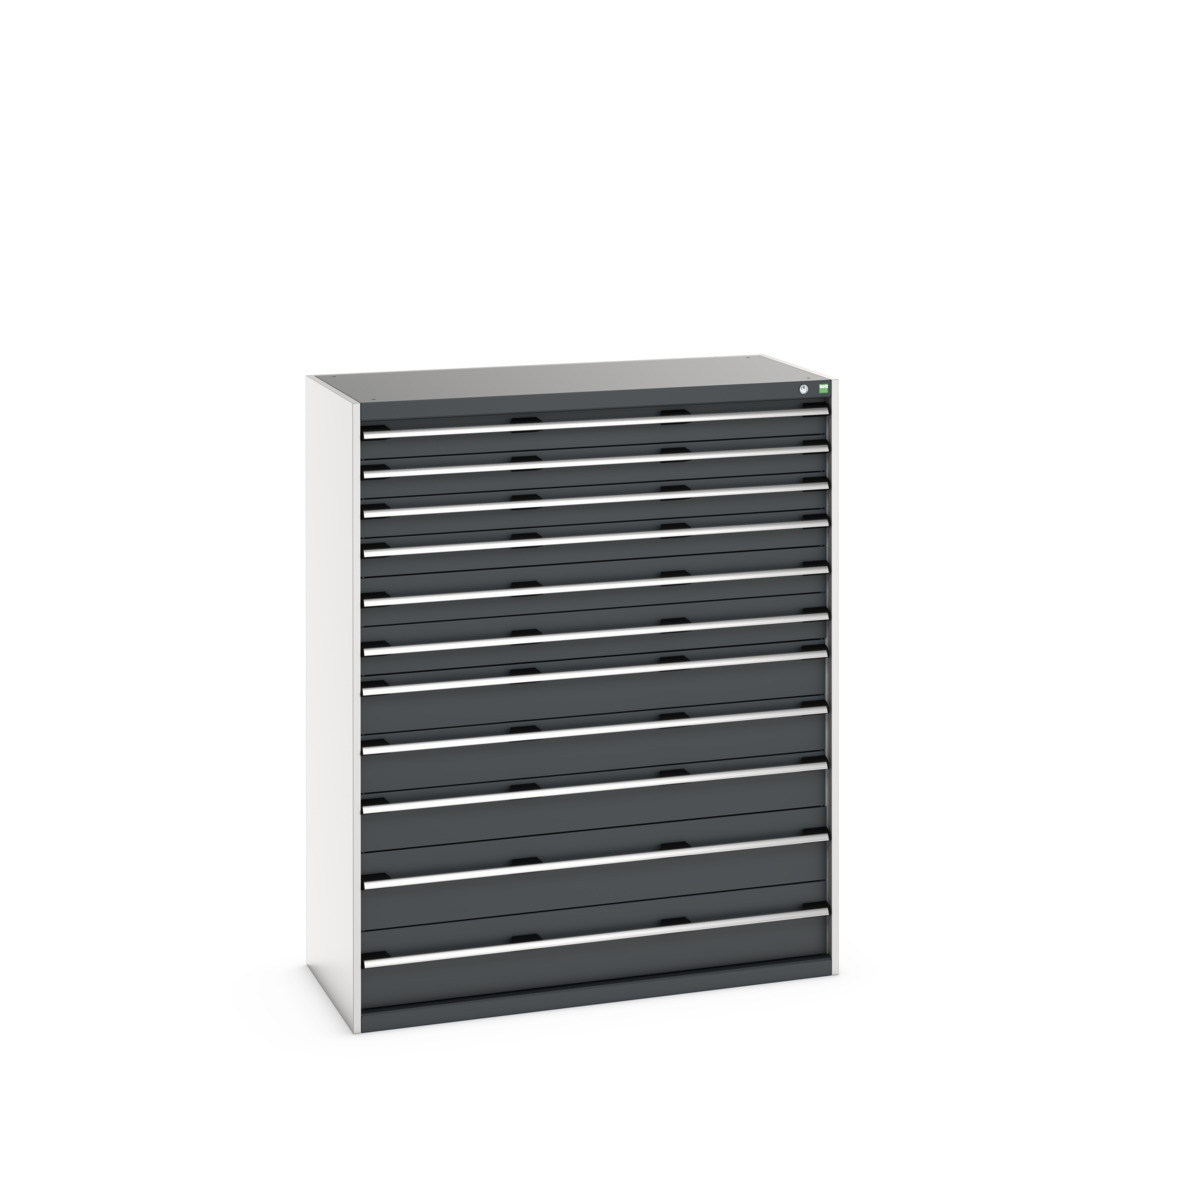 40022135. - cubio drawer cabinet